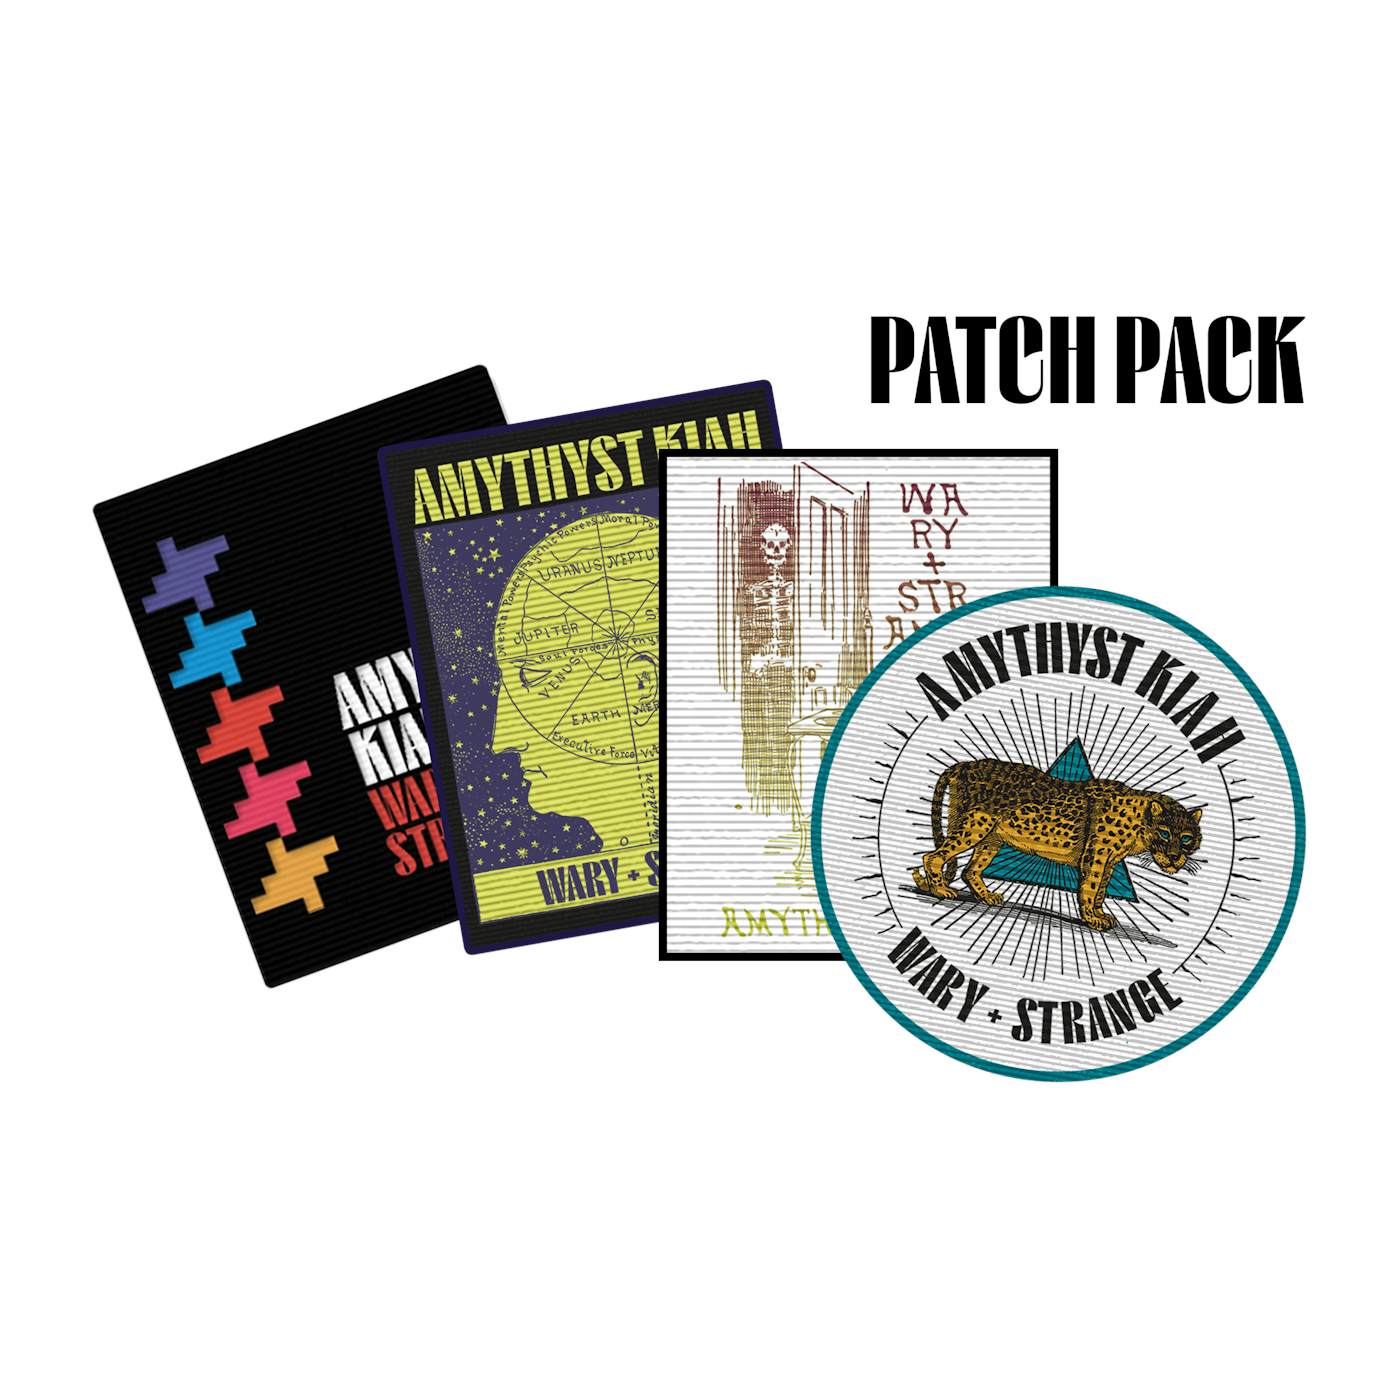 Amythyst Kiah "Wary + Strange" Woven Patch Pack (set of 4)